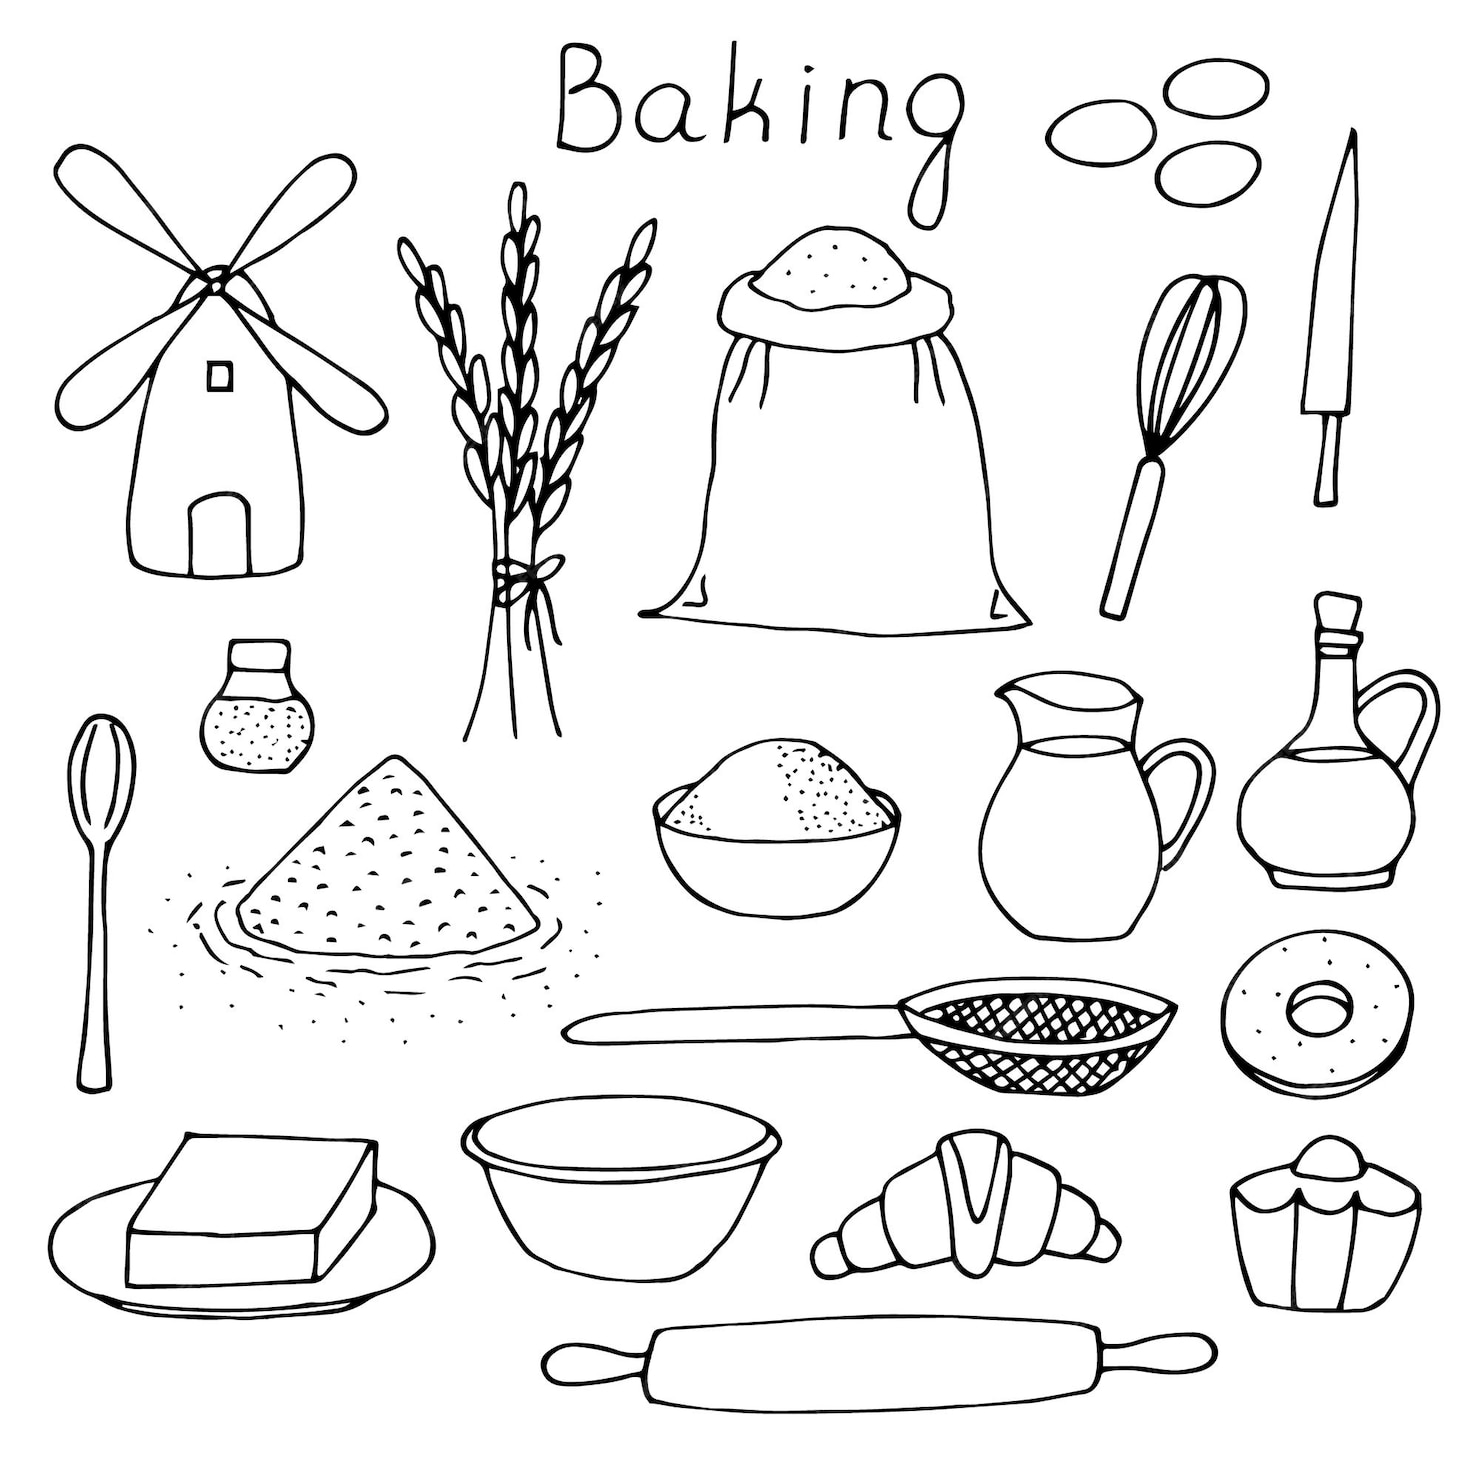 Premium Vector Baking set vector illustration, hand drawing doodles